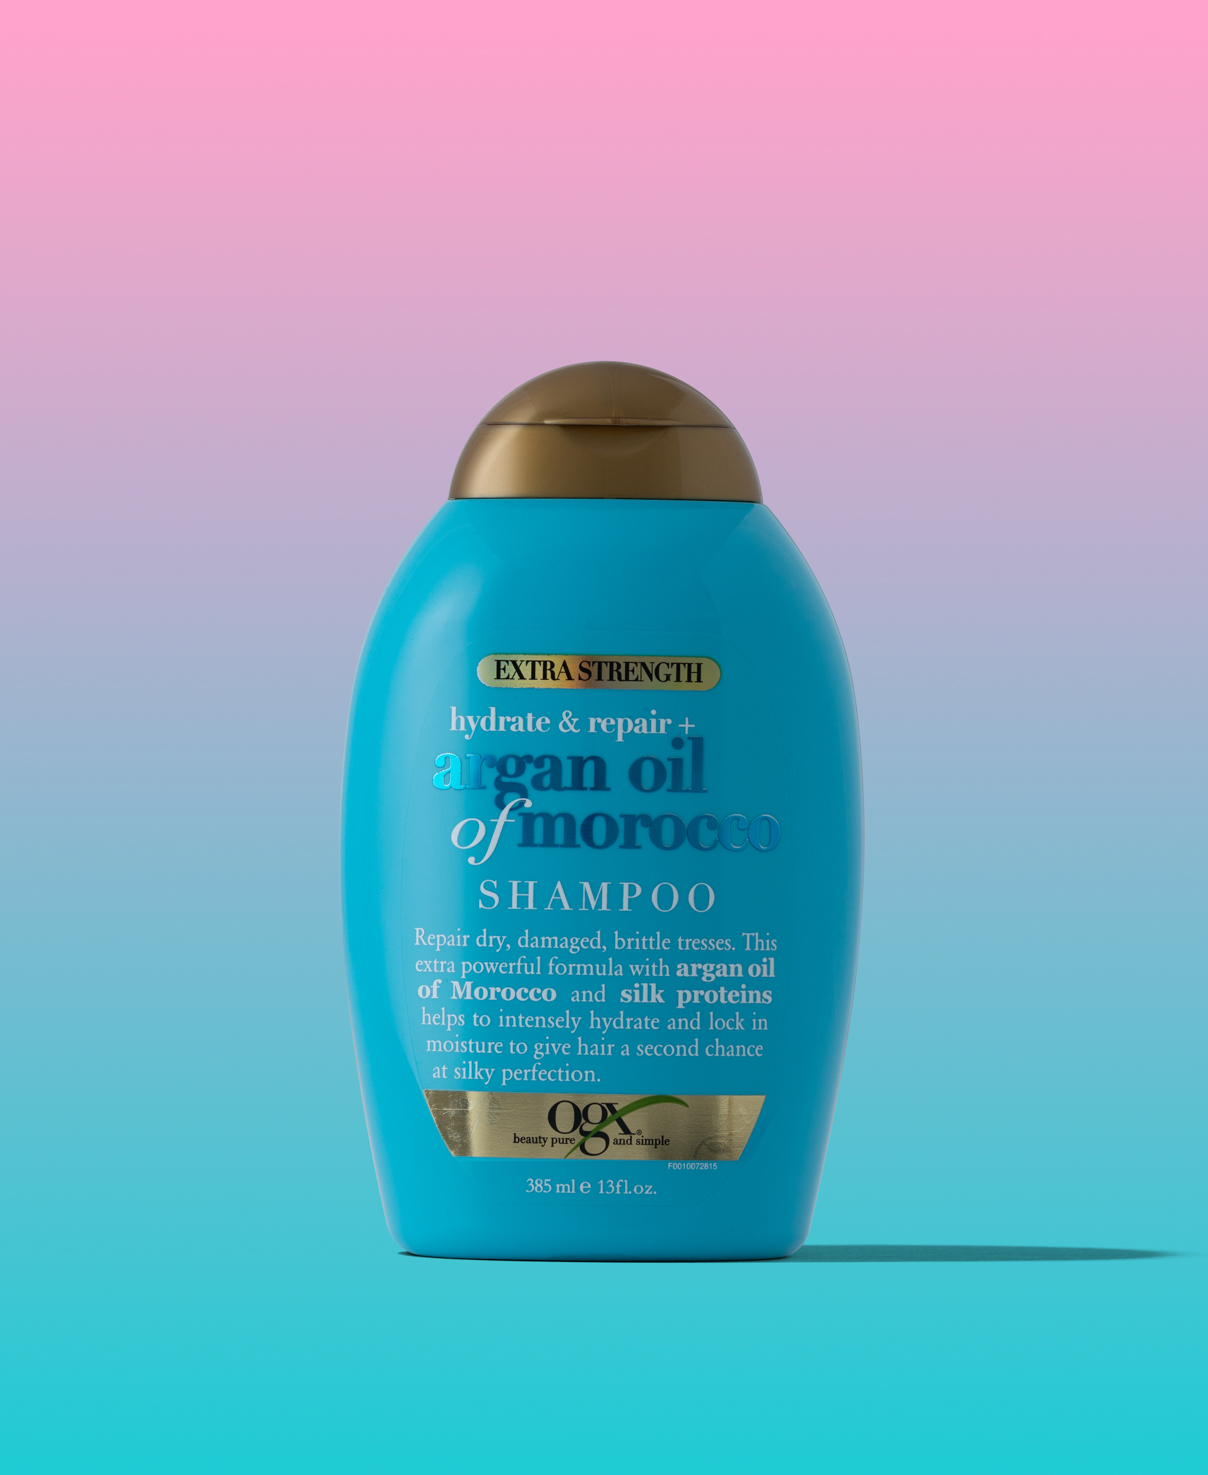 Extra Strength + Repair Oil of Morocco Shampoo 13 fl oz | OGX Beauty